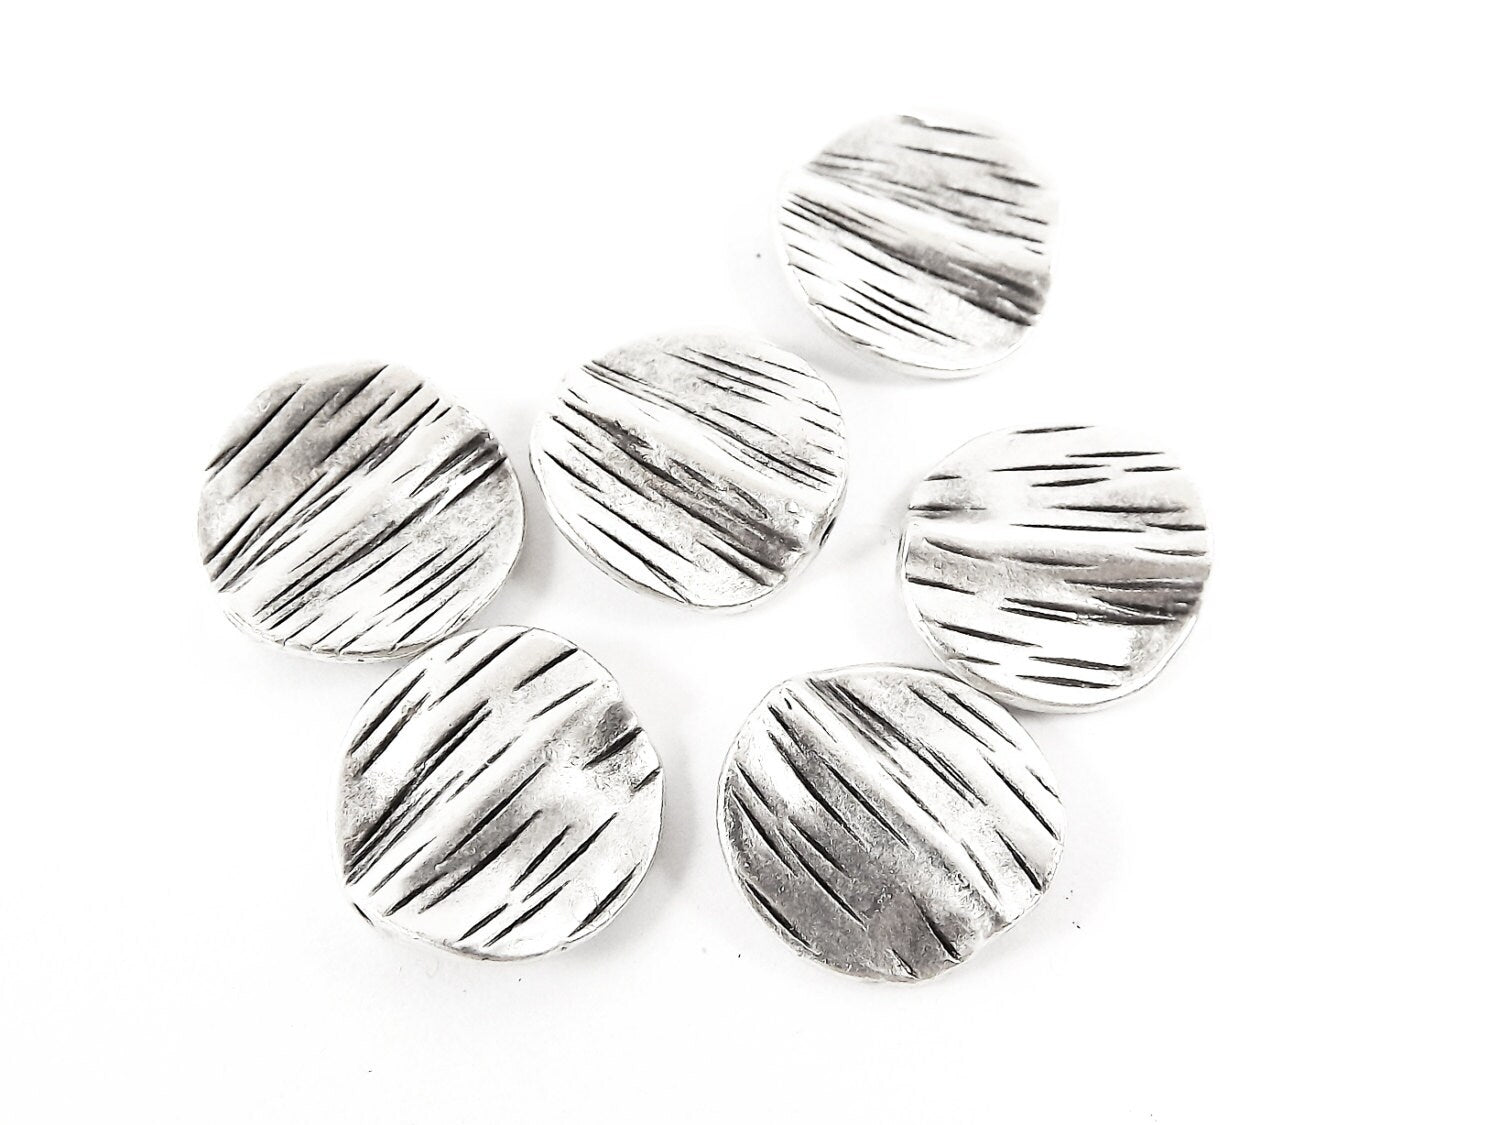 6 Warped Round Disc Statement Spacer Bead Pendants - Matte Antique Silver Plated